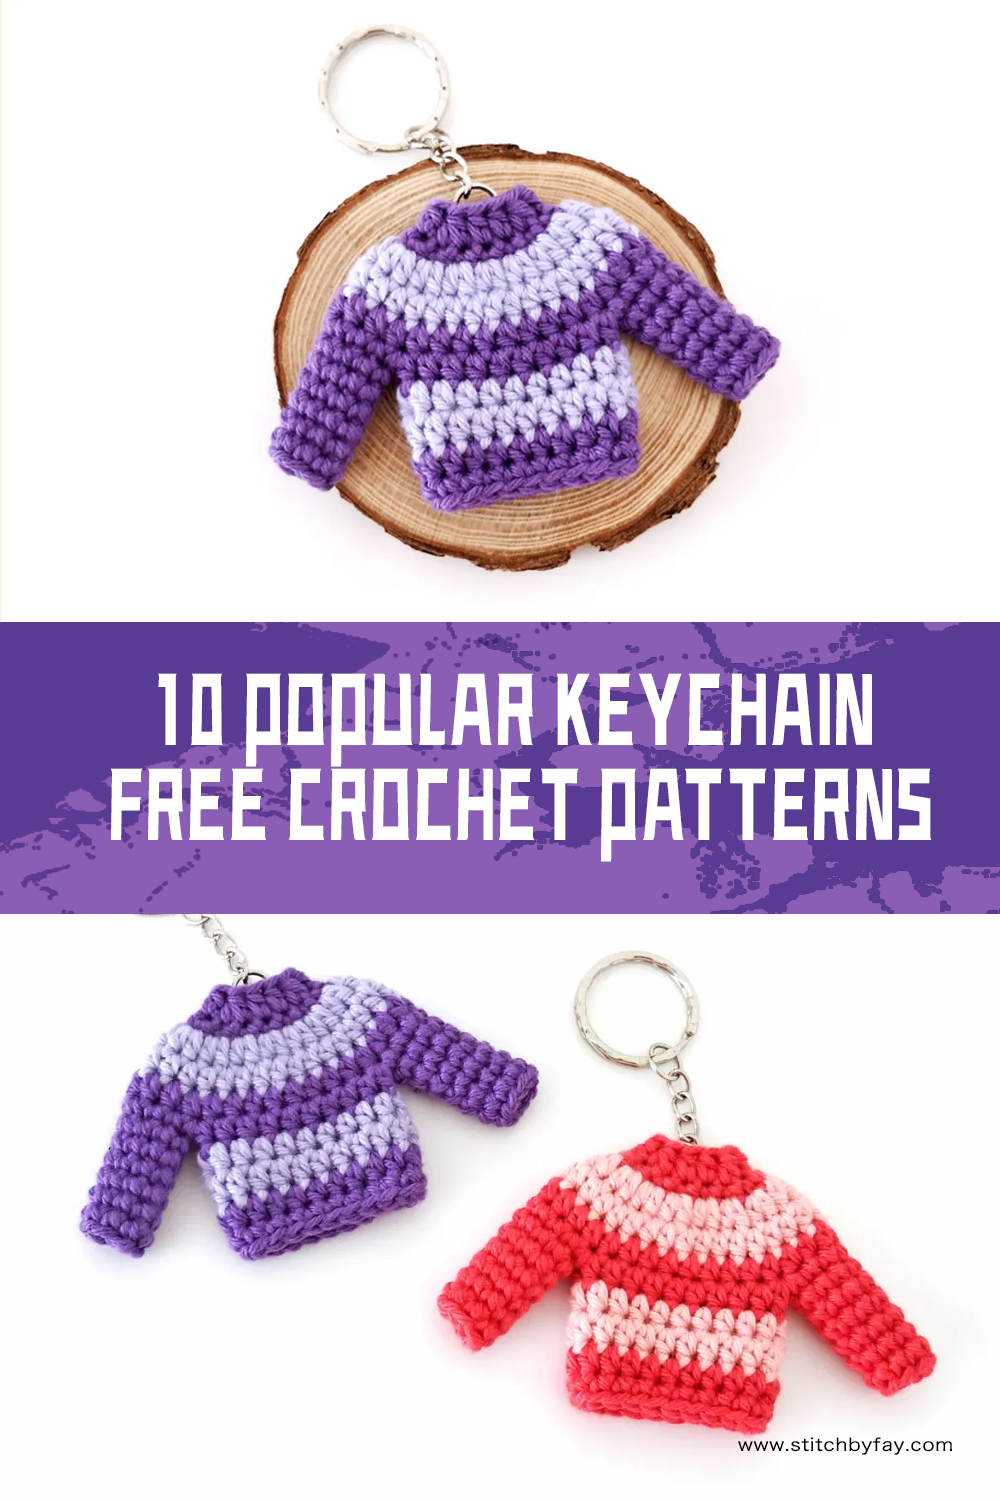 10 FREE Popular Keychain Crochet Patterns 